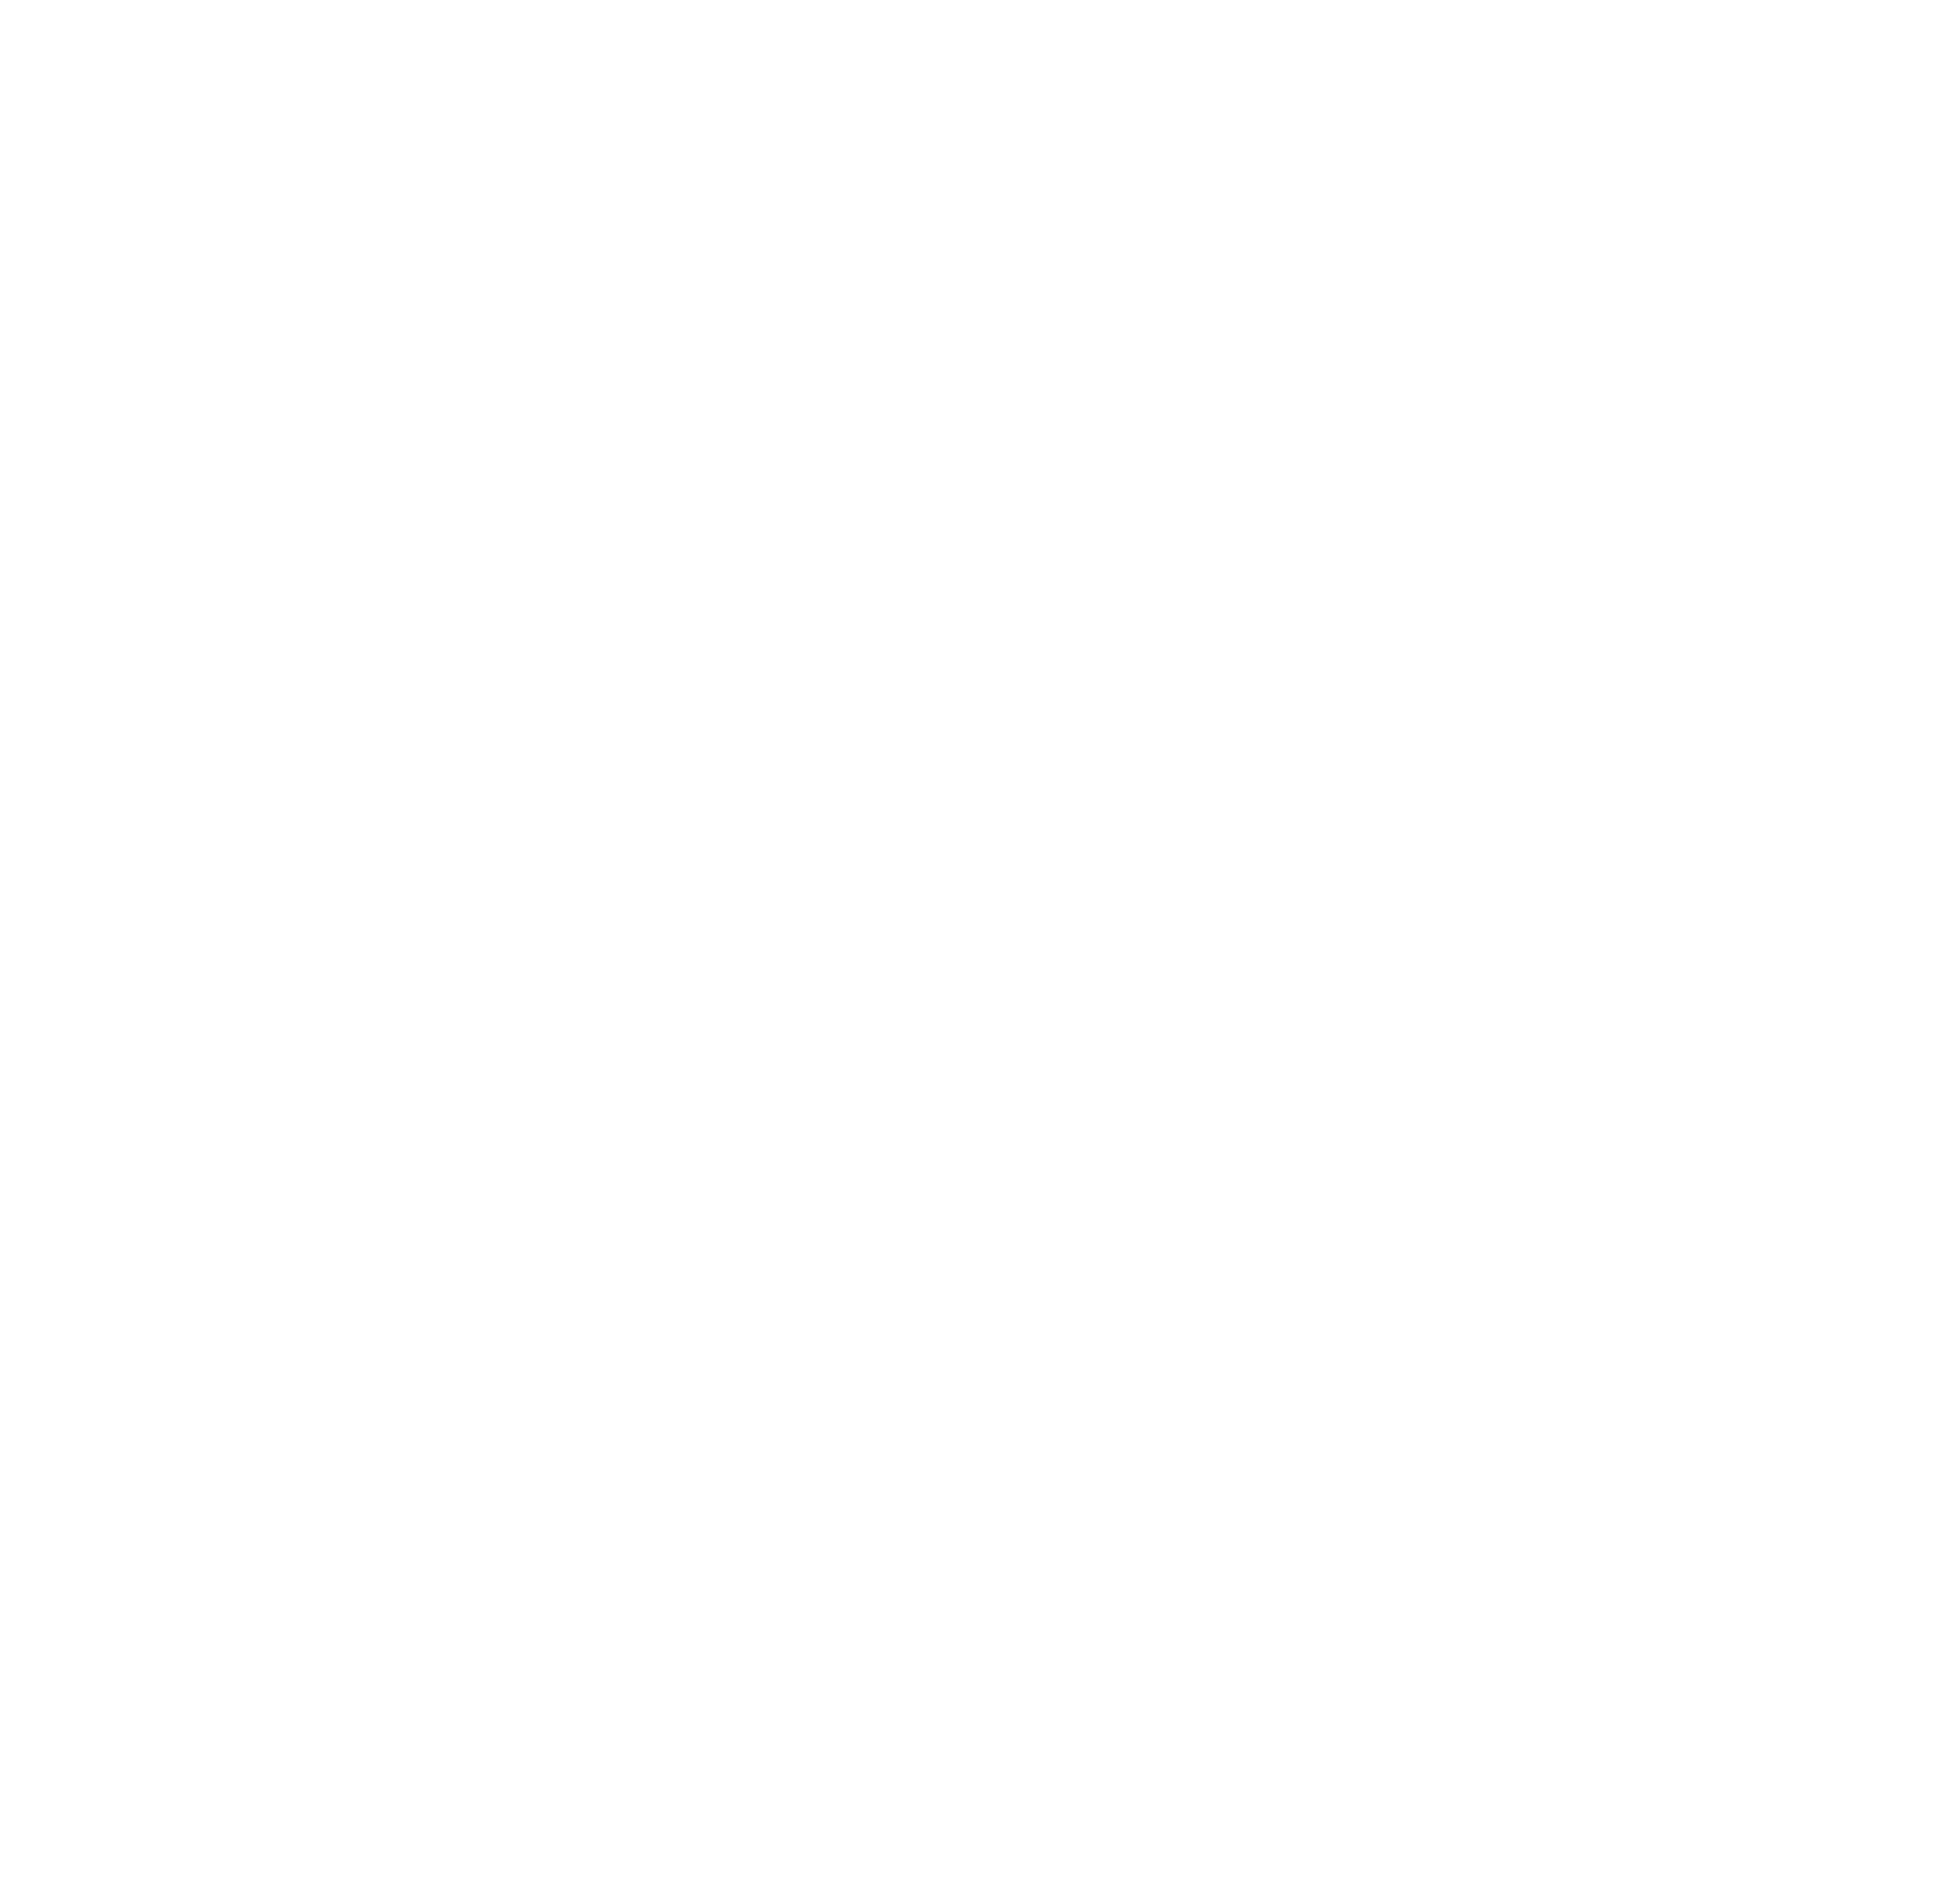 GAY GAMES PARIS 2018